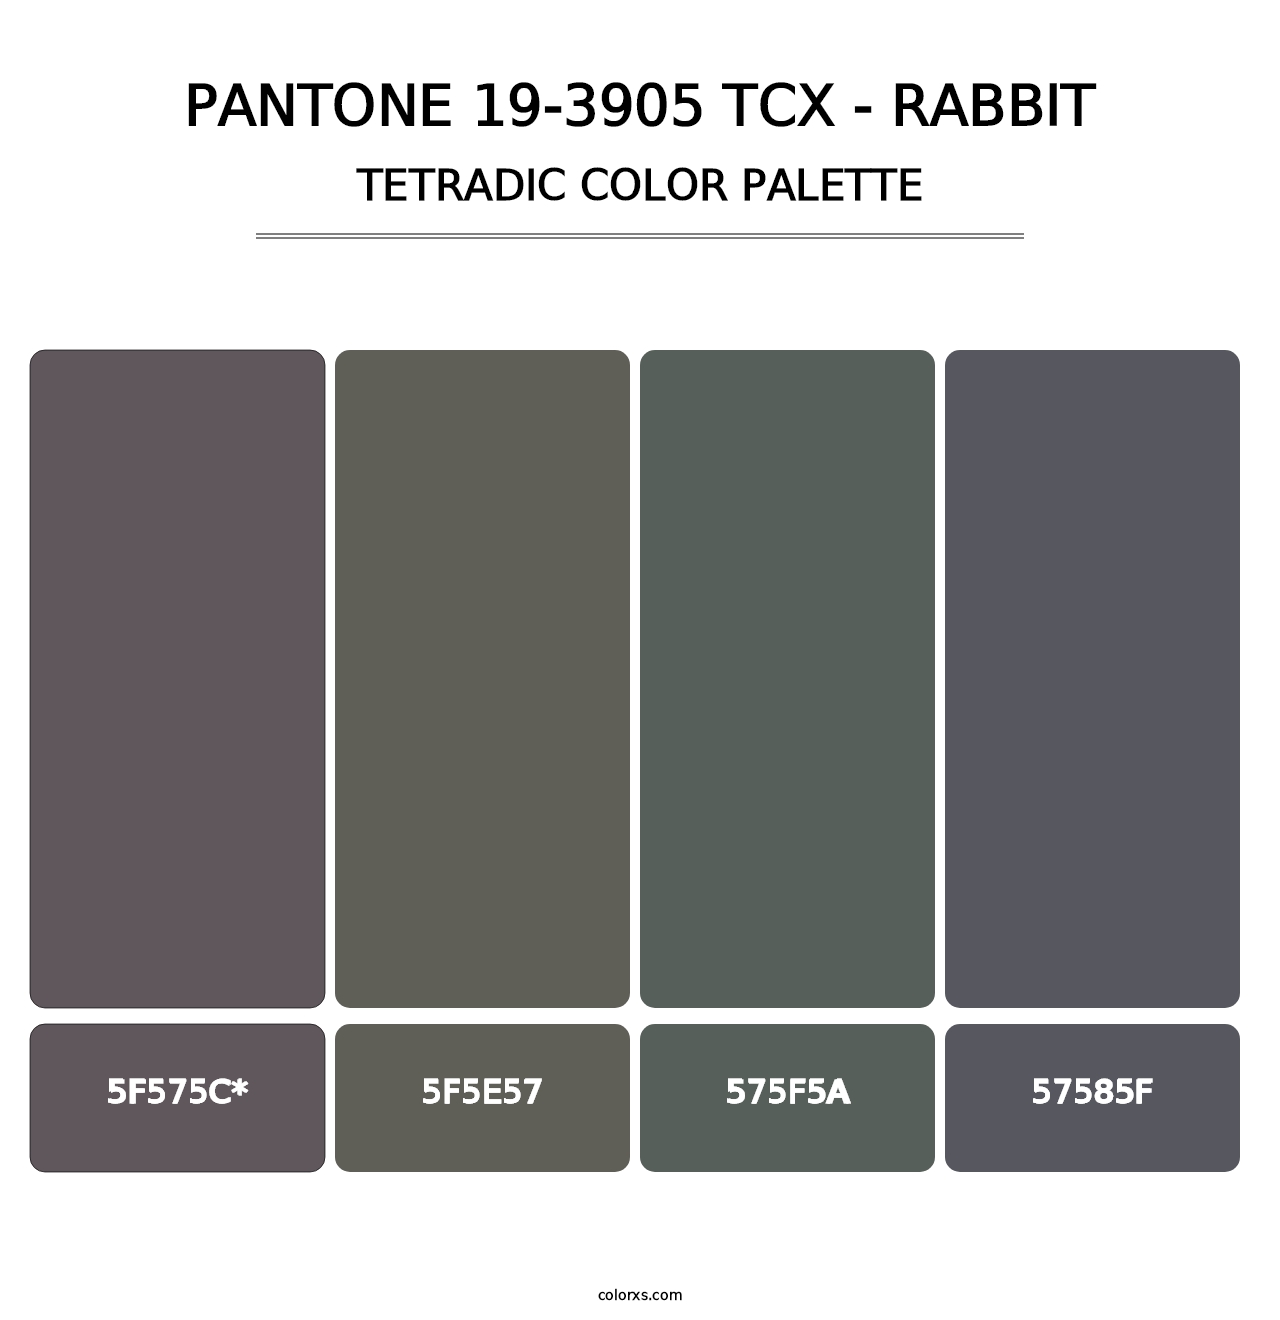 PANTONE 19-3905 TCX - Rabbit - Tetradic Color Palette